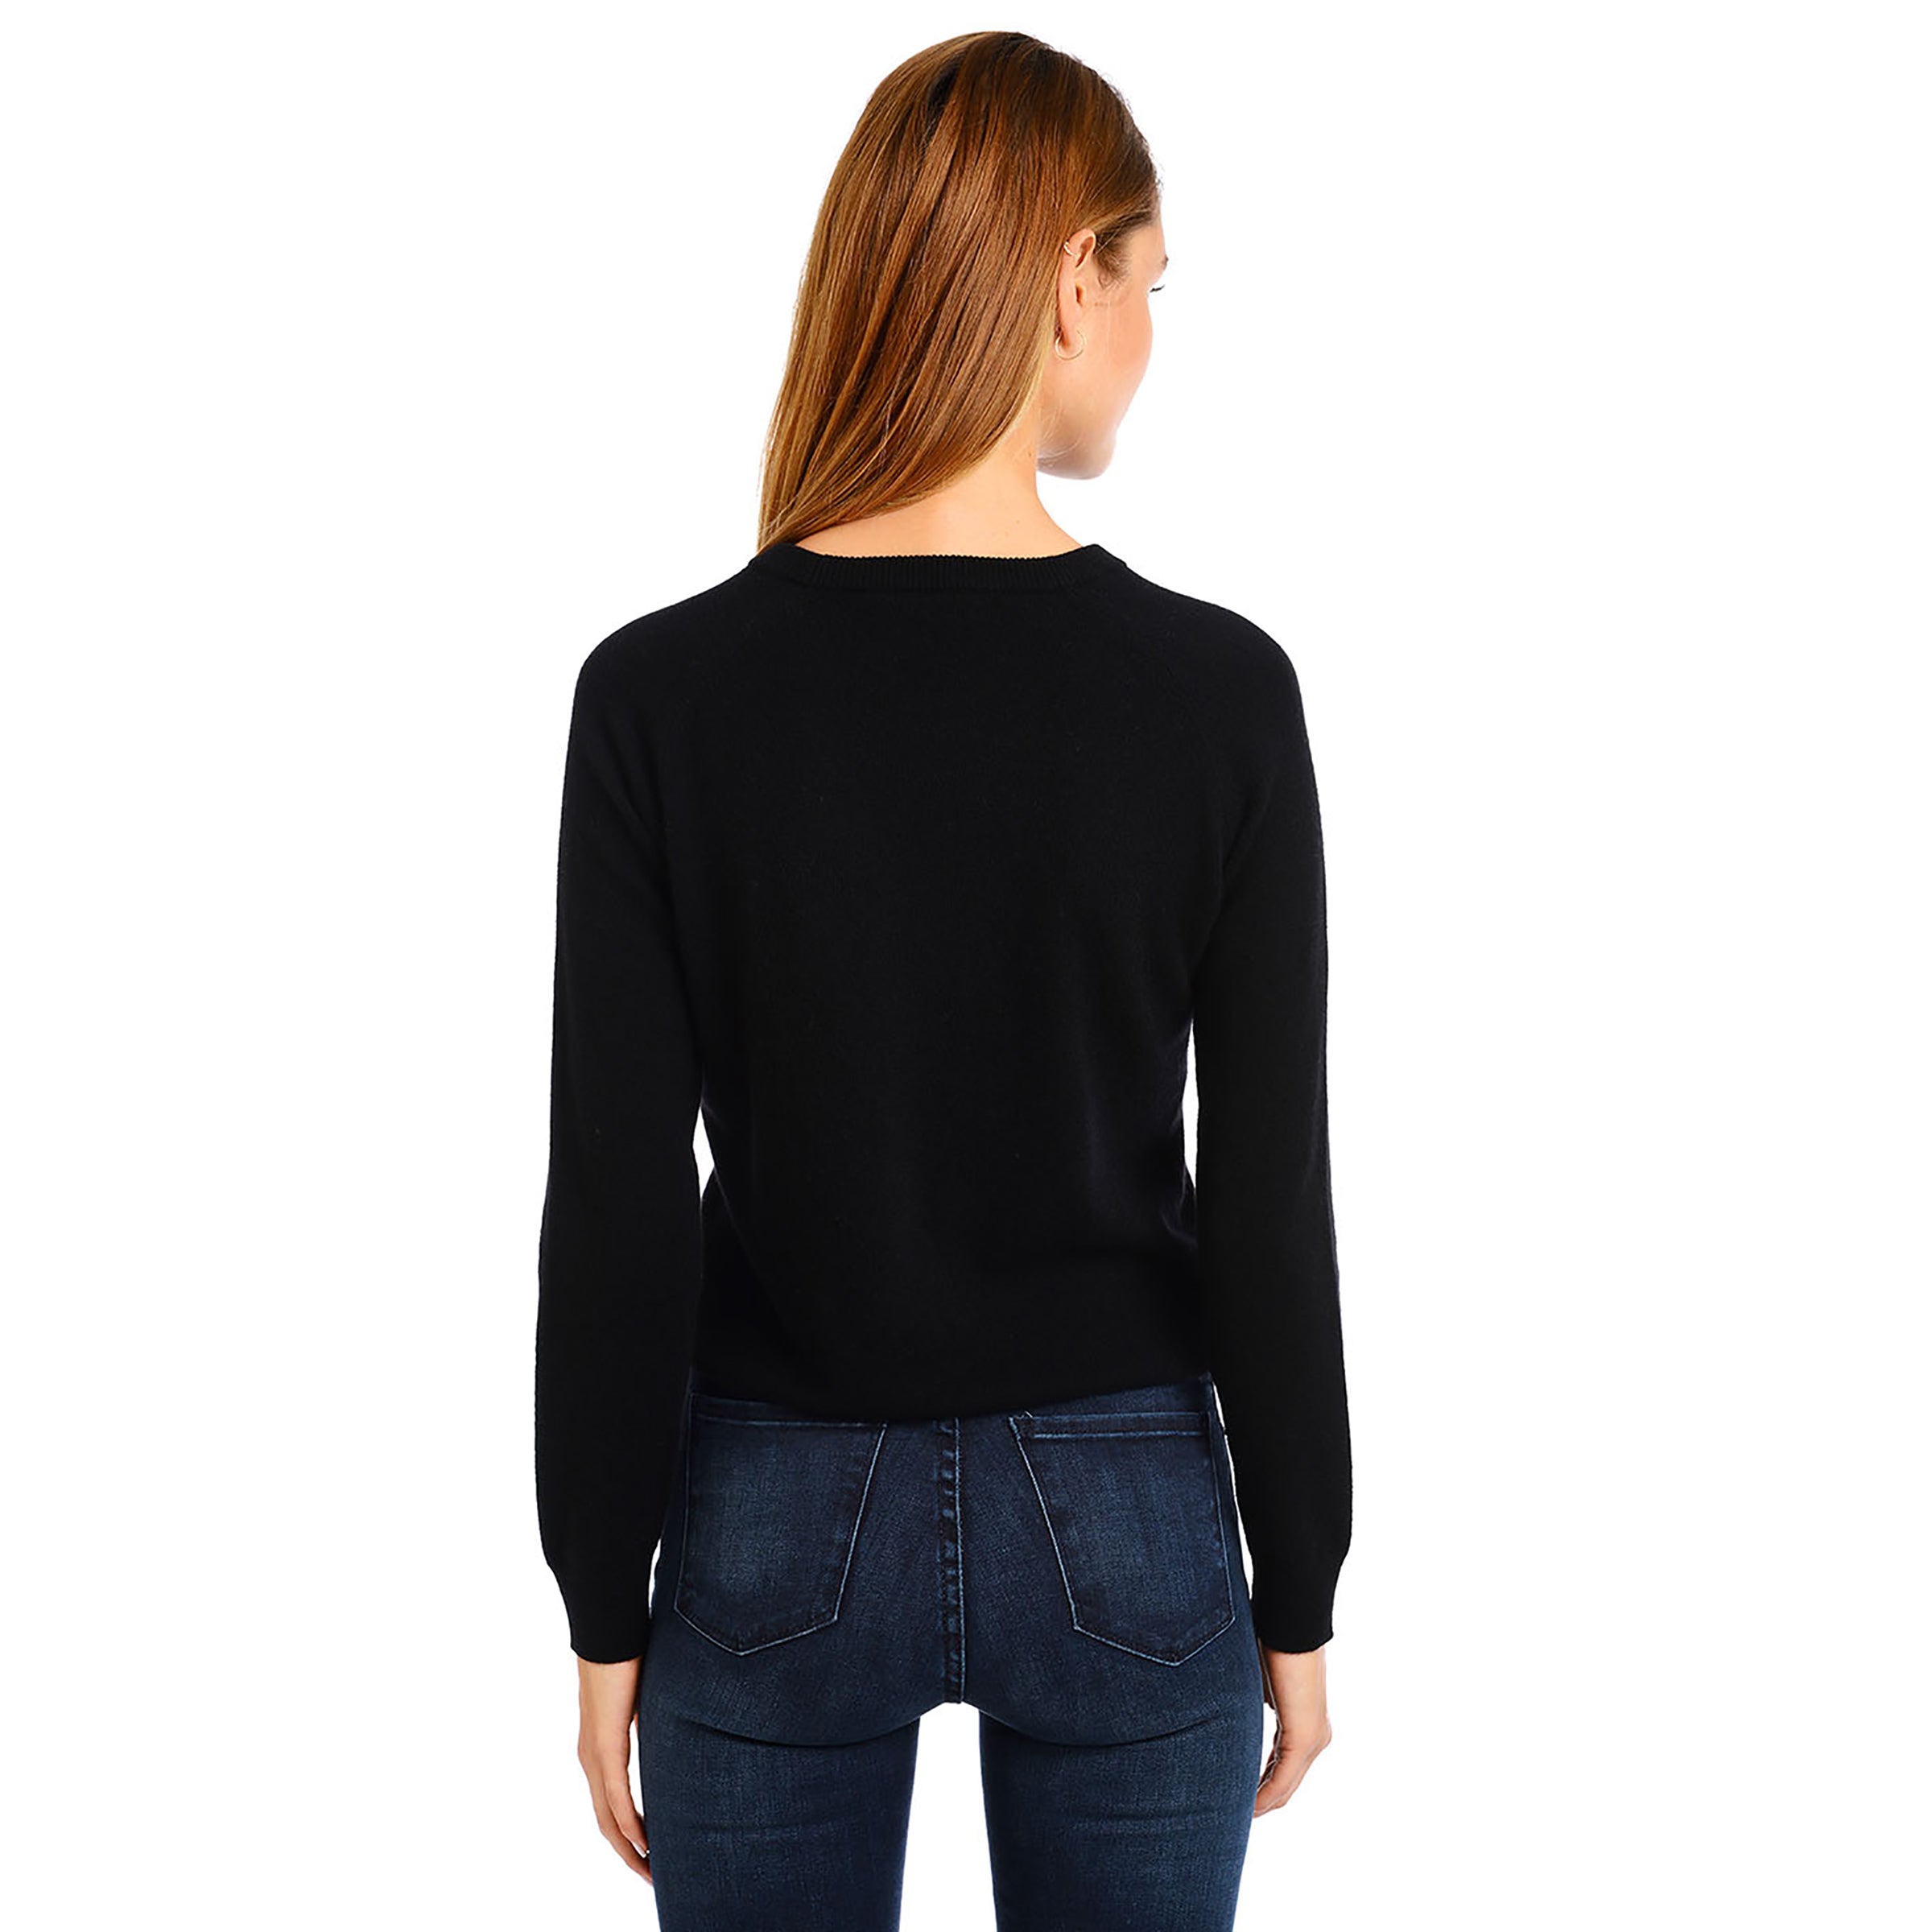 Women wearing Black Cashmere Raglan Crew Cambridge Sweater